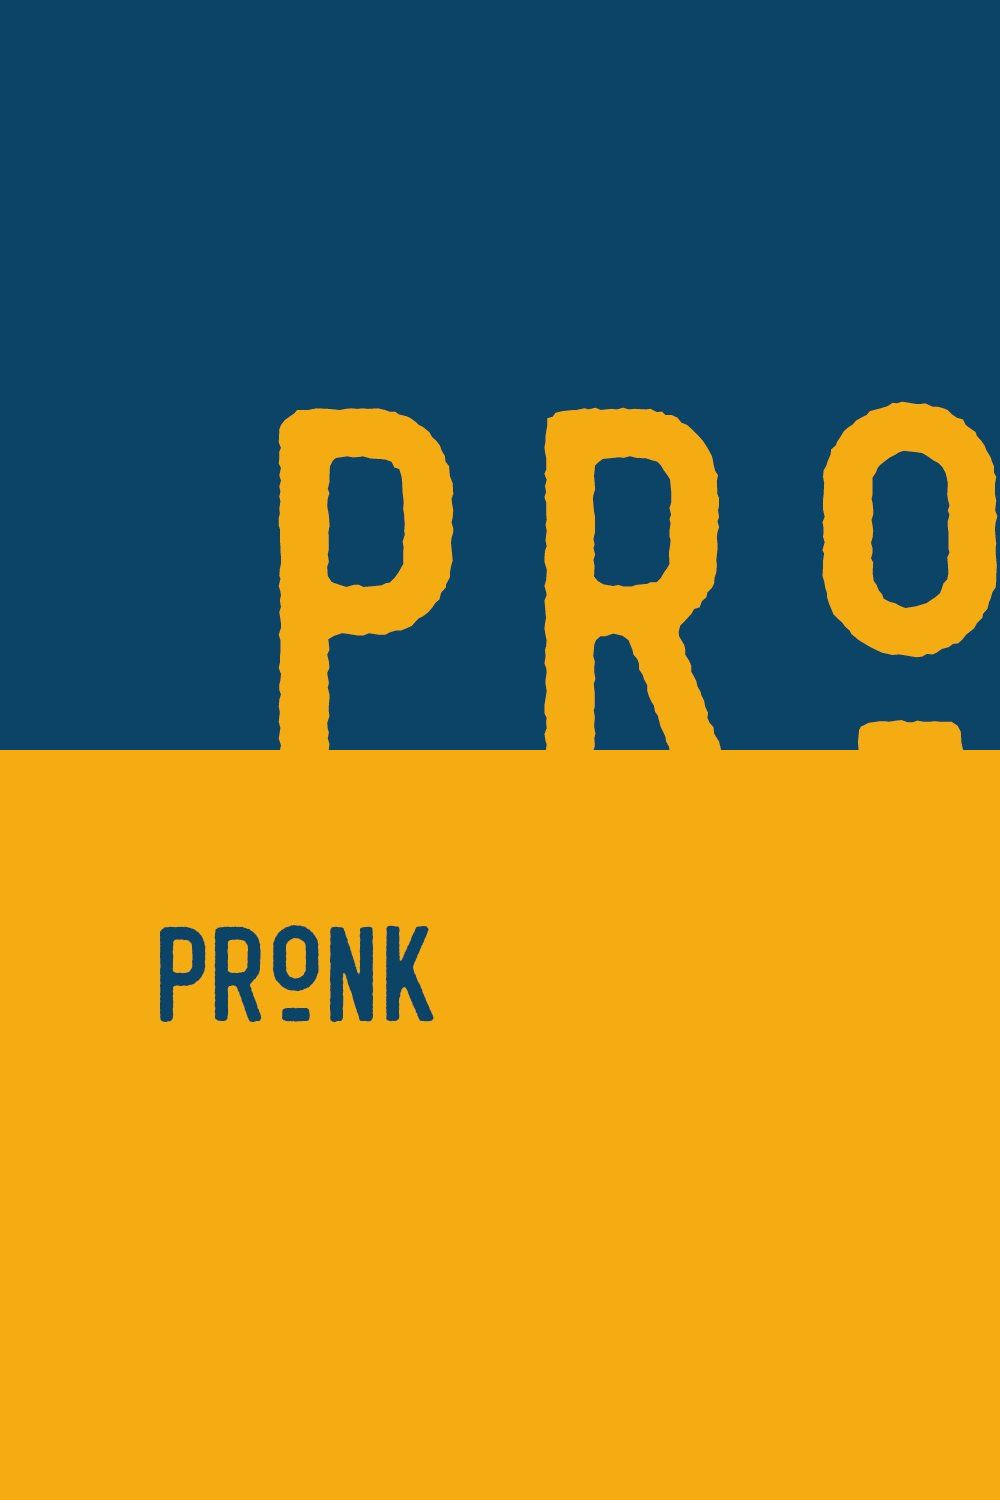 Pronk - retro vintage display font pinterest preview image.